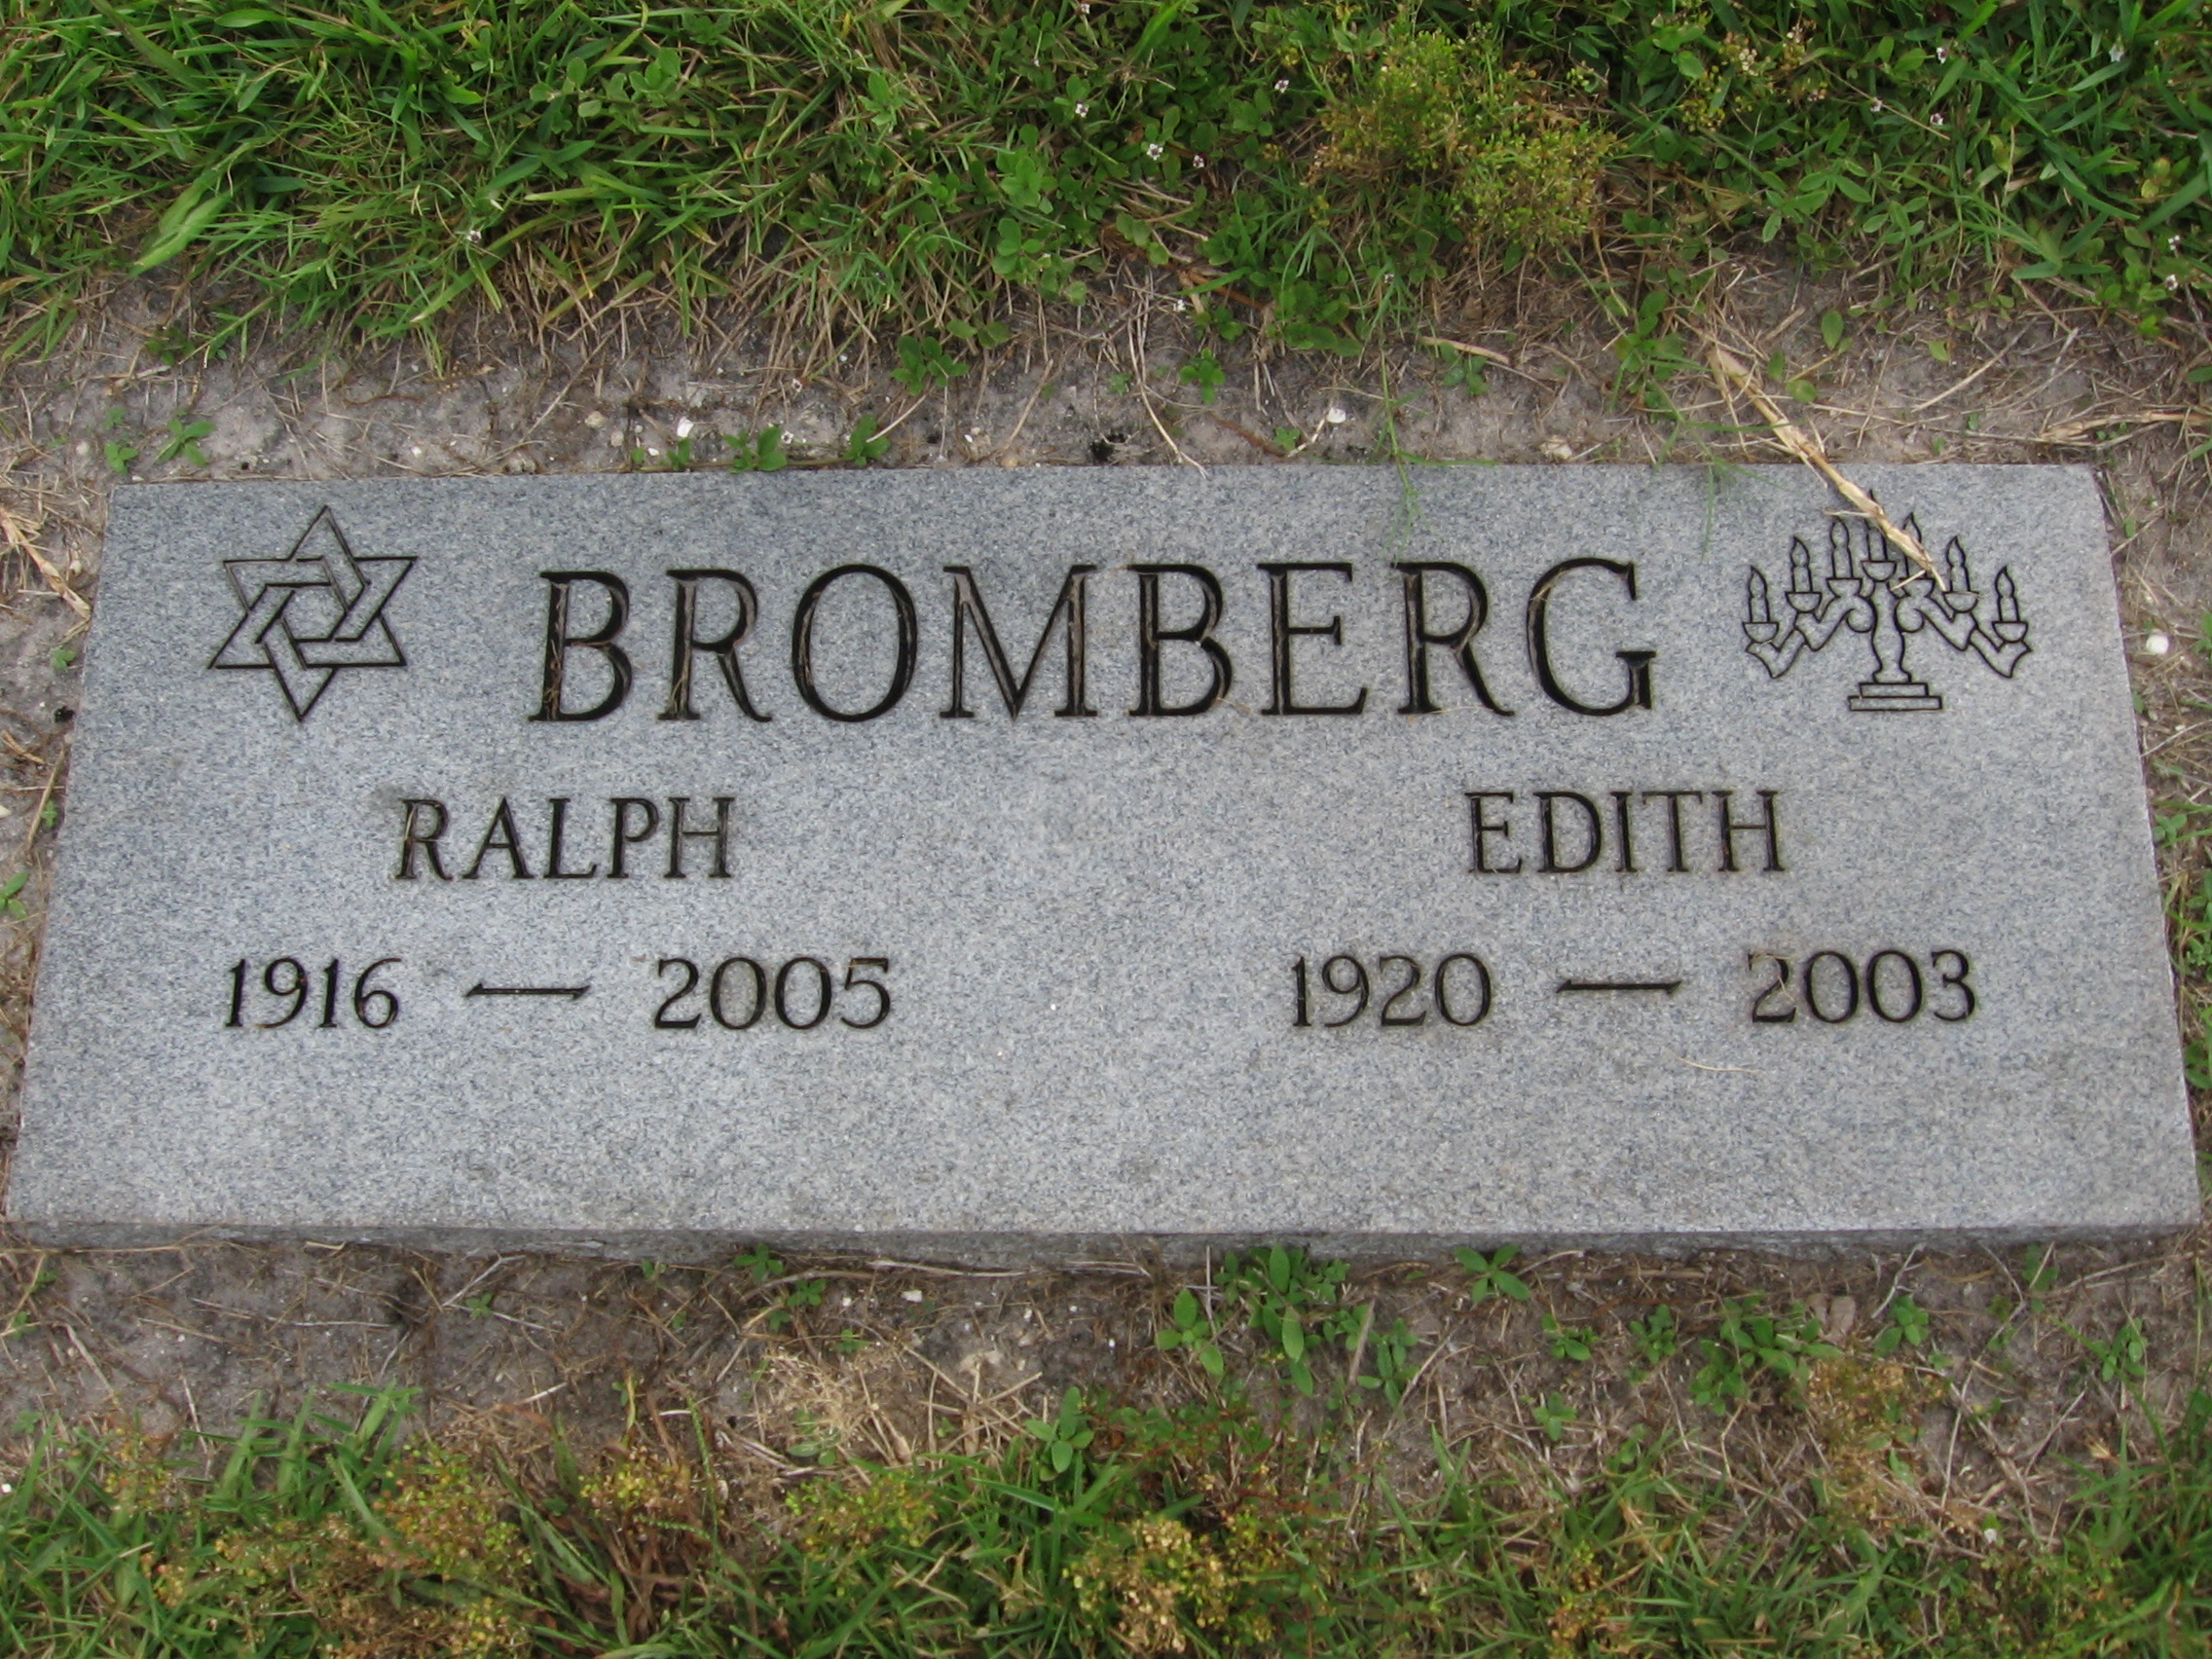 Edith Bromberg